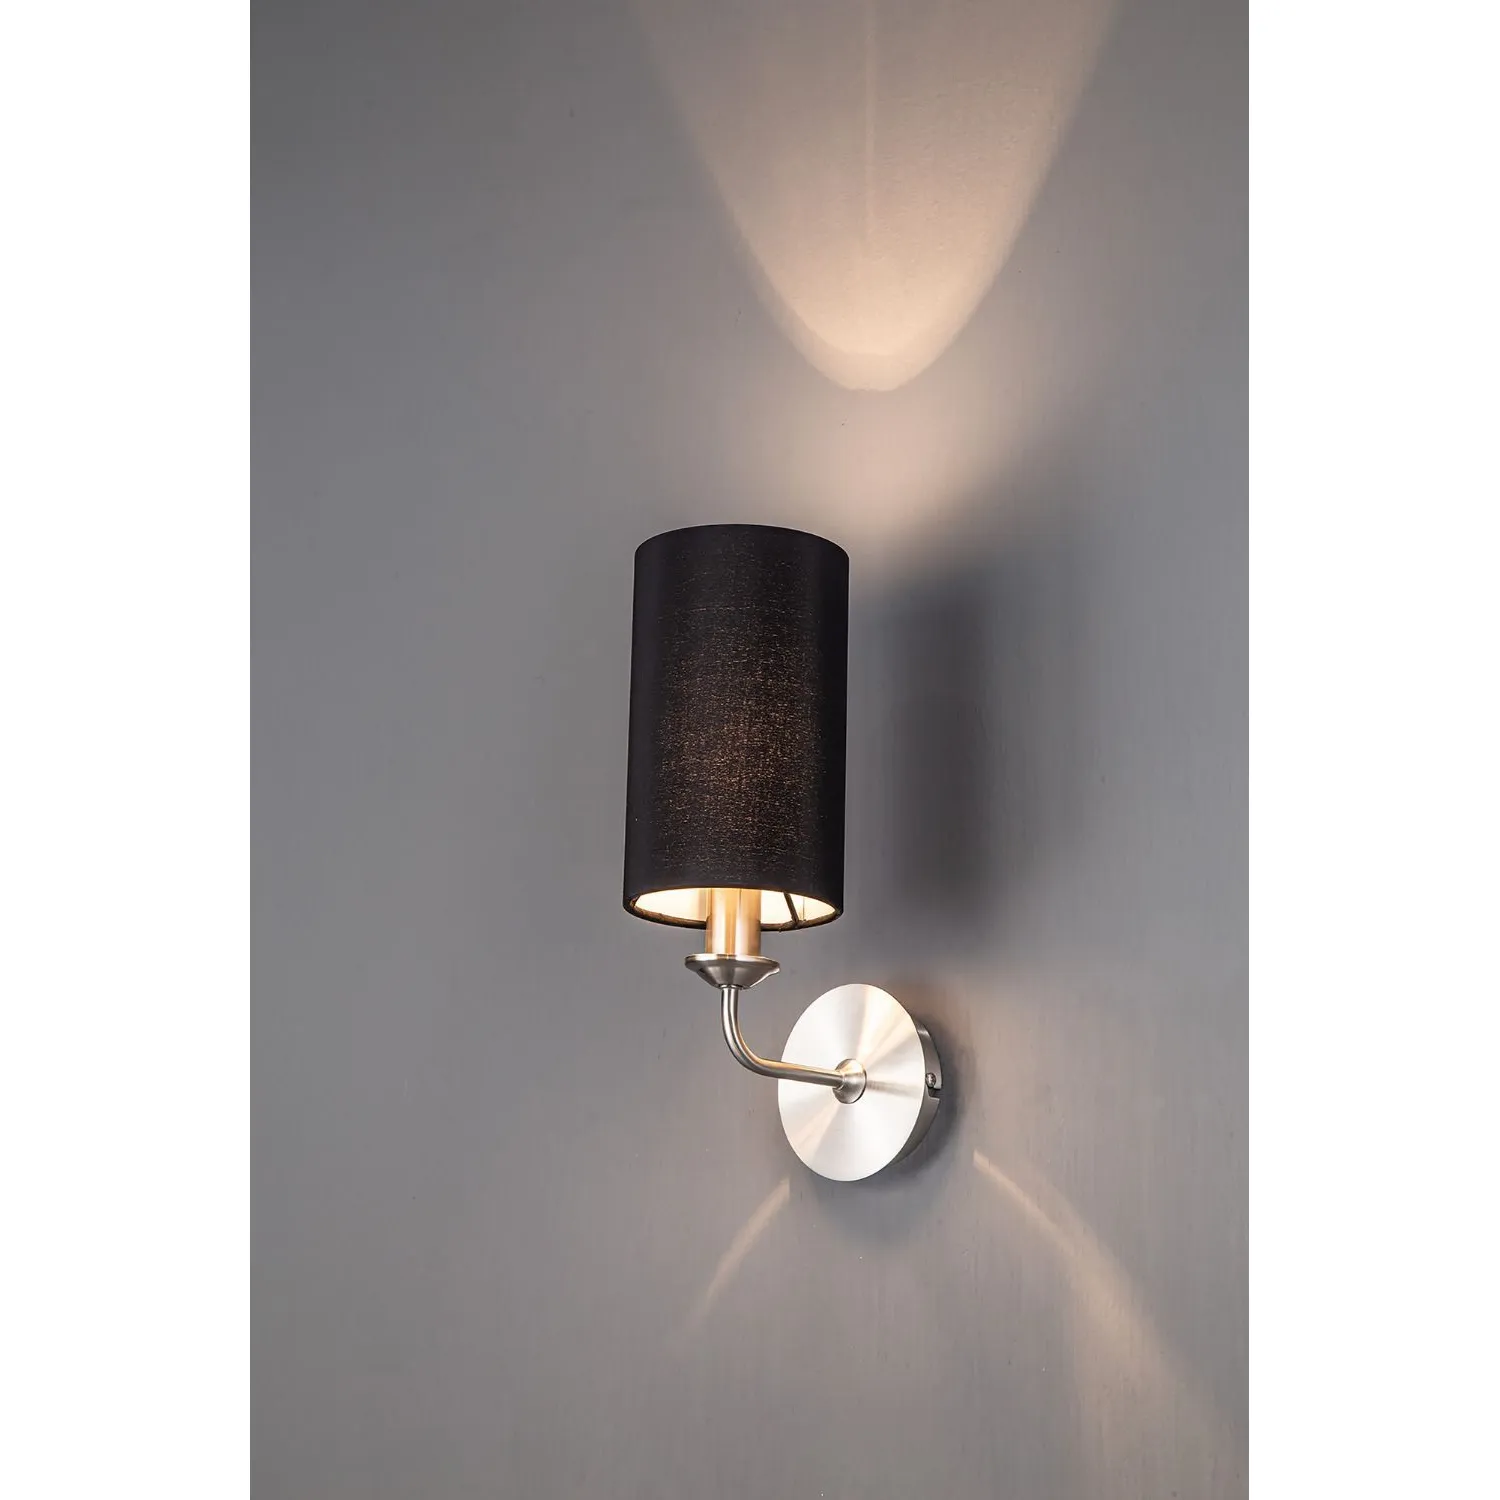 Banyan 1 Light Switched Wall Lamp, E14 Satin Nickel c w 120mm Faux Silk Shade, Black